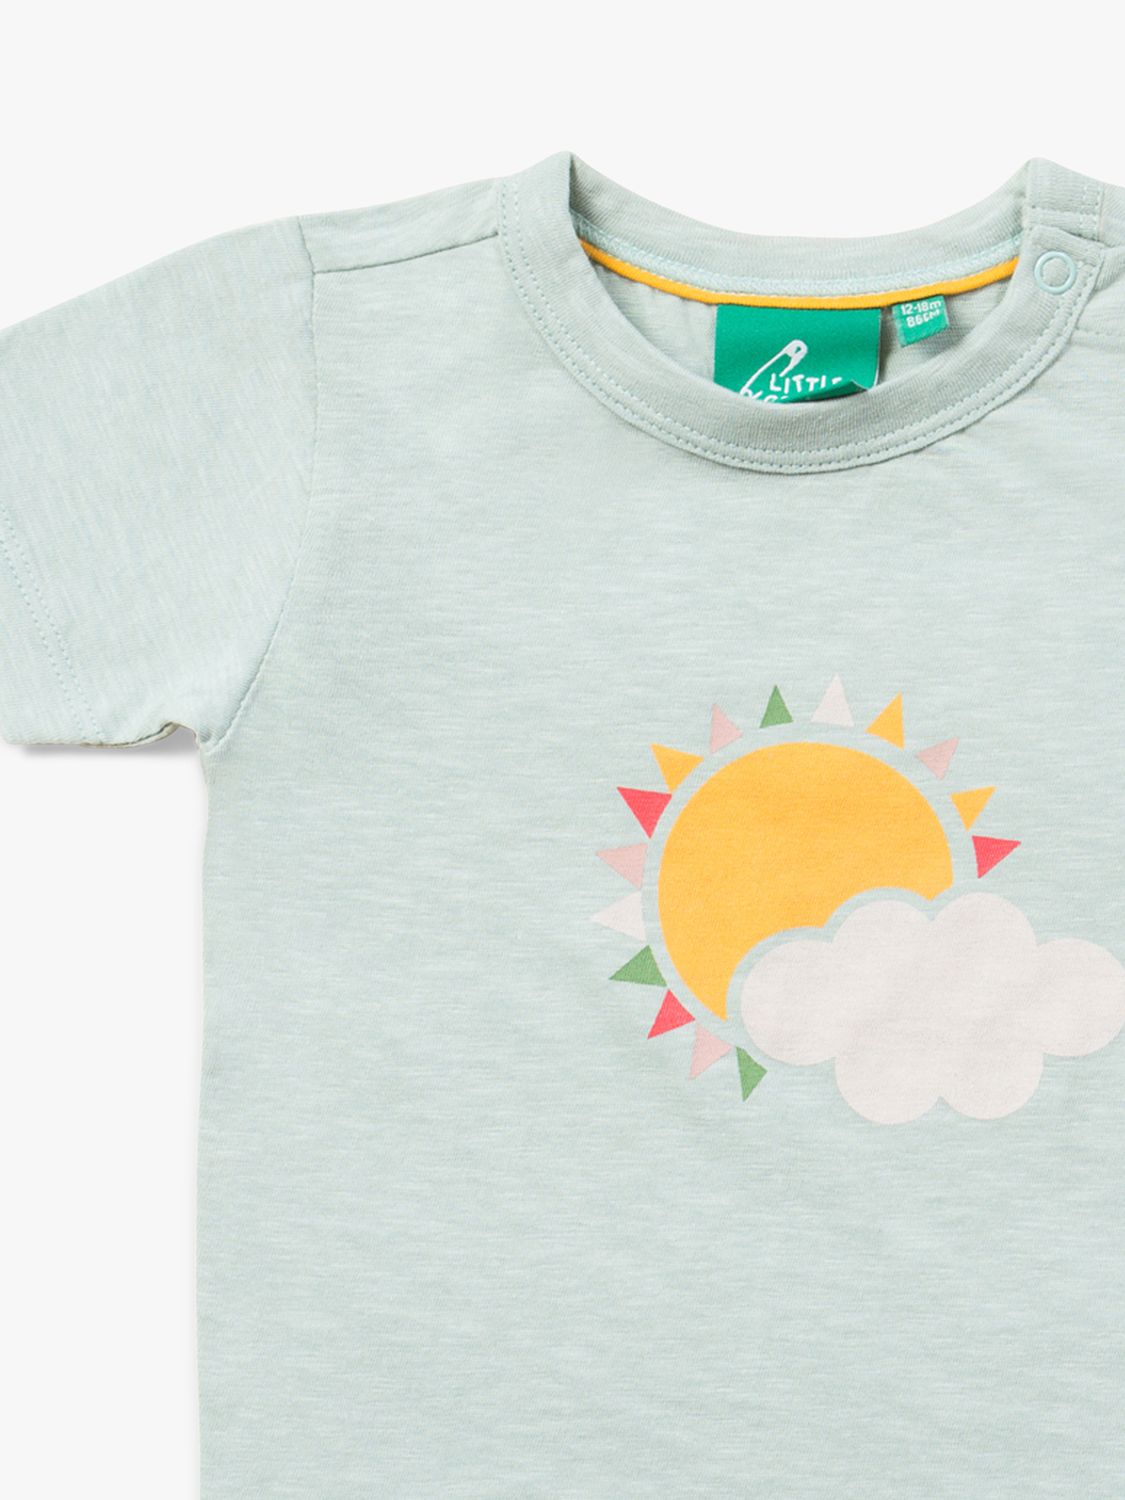 Little Green Radicals Baby Organic Short Sleeve T-shirt, Multi, 0-3 months